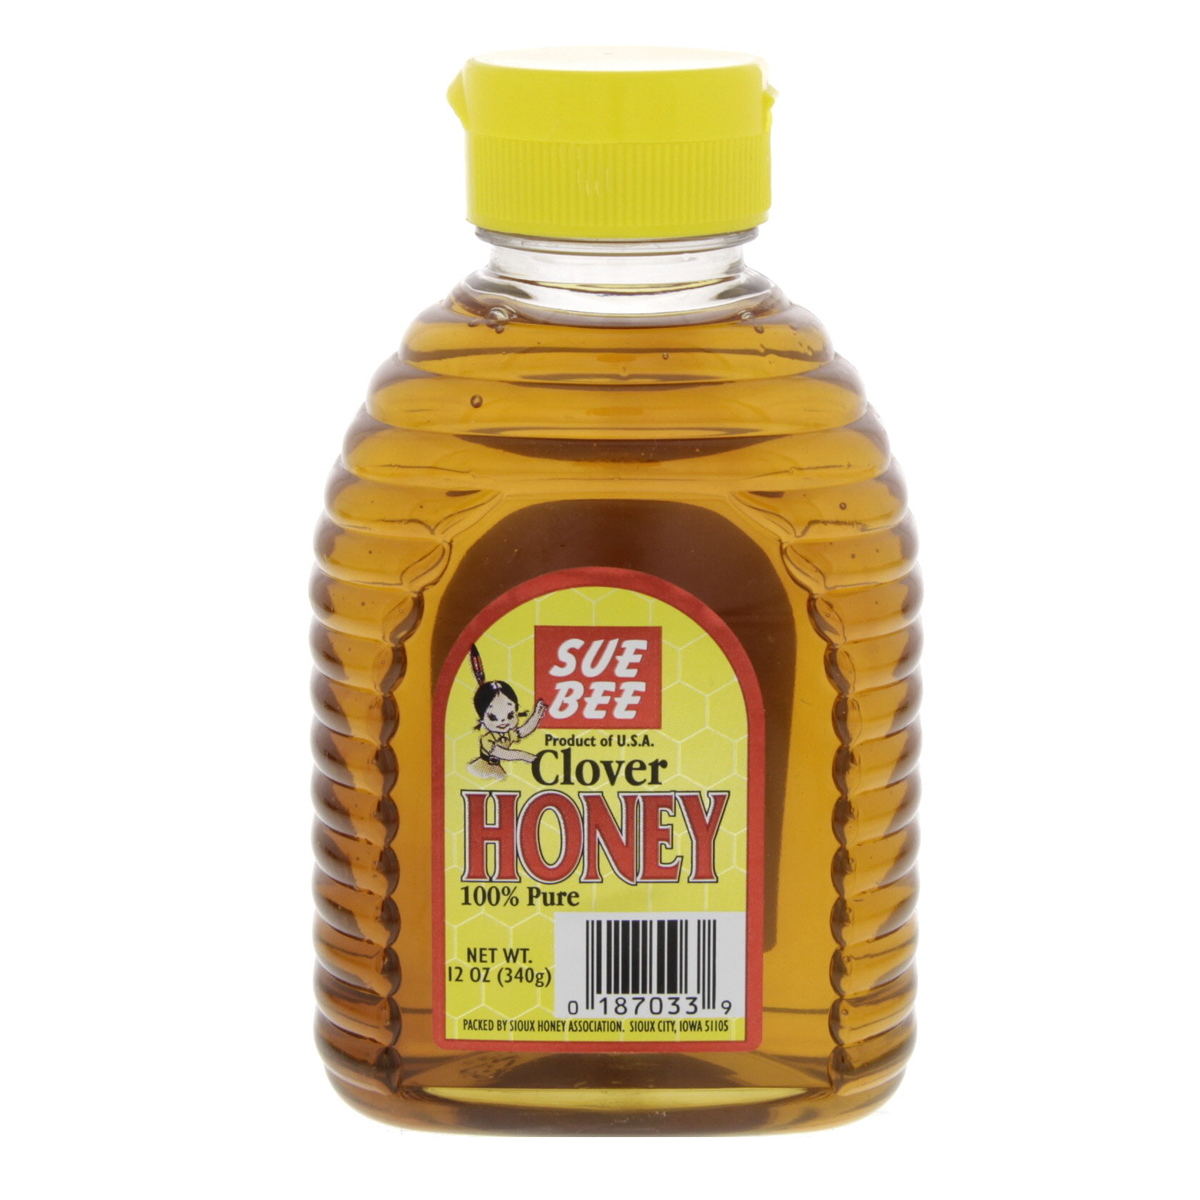 Sue Bee Clover Honey 340g